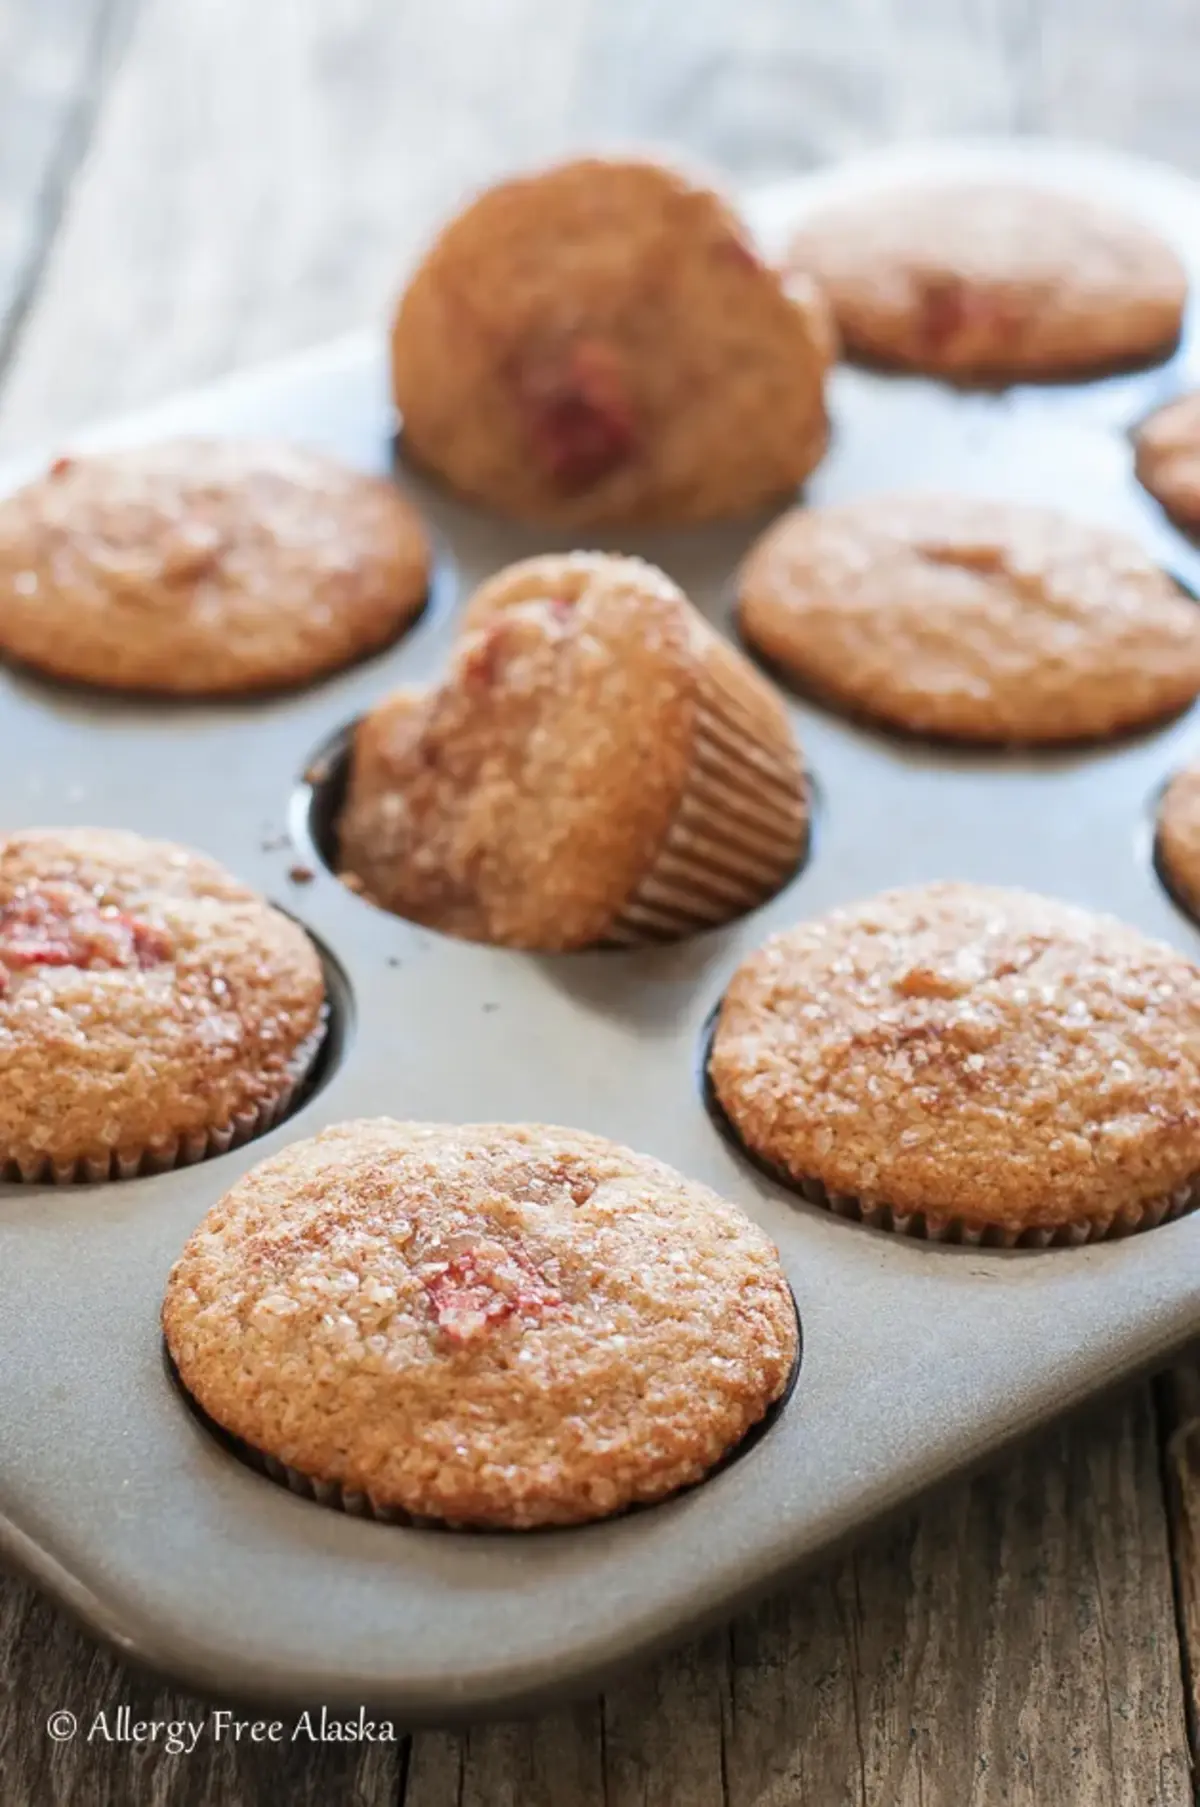 Gluten Free Rhubarb Muffins in a baking tray.